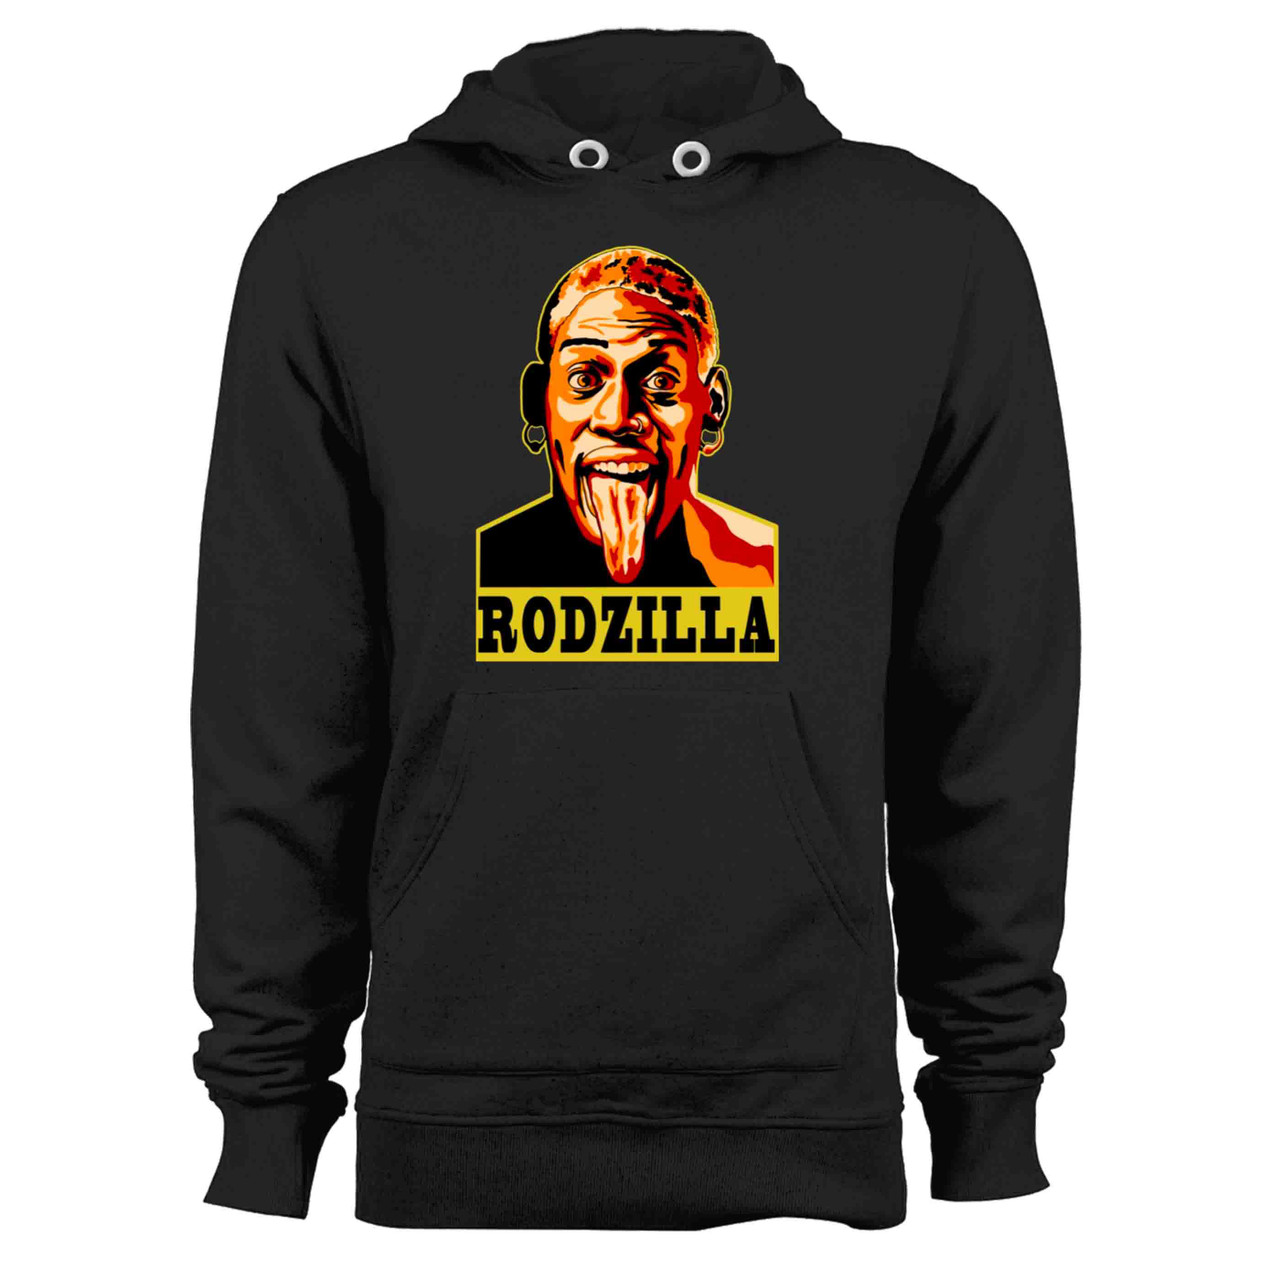 Rodzilla Dennis Rodman Tshirt The Worm nWo Wrestling